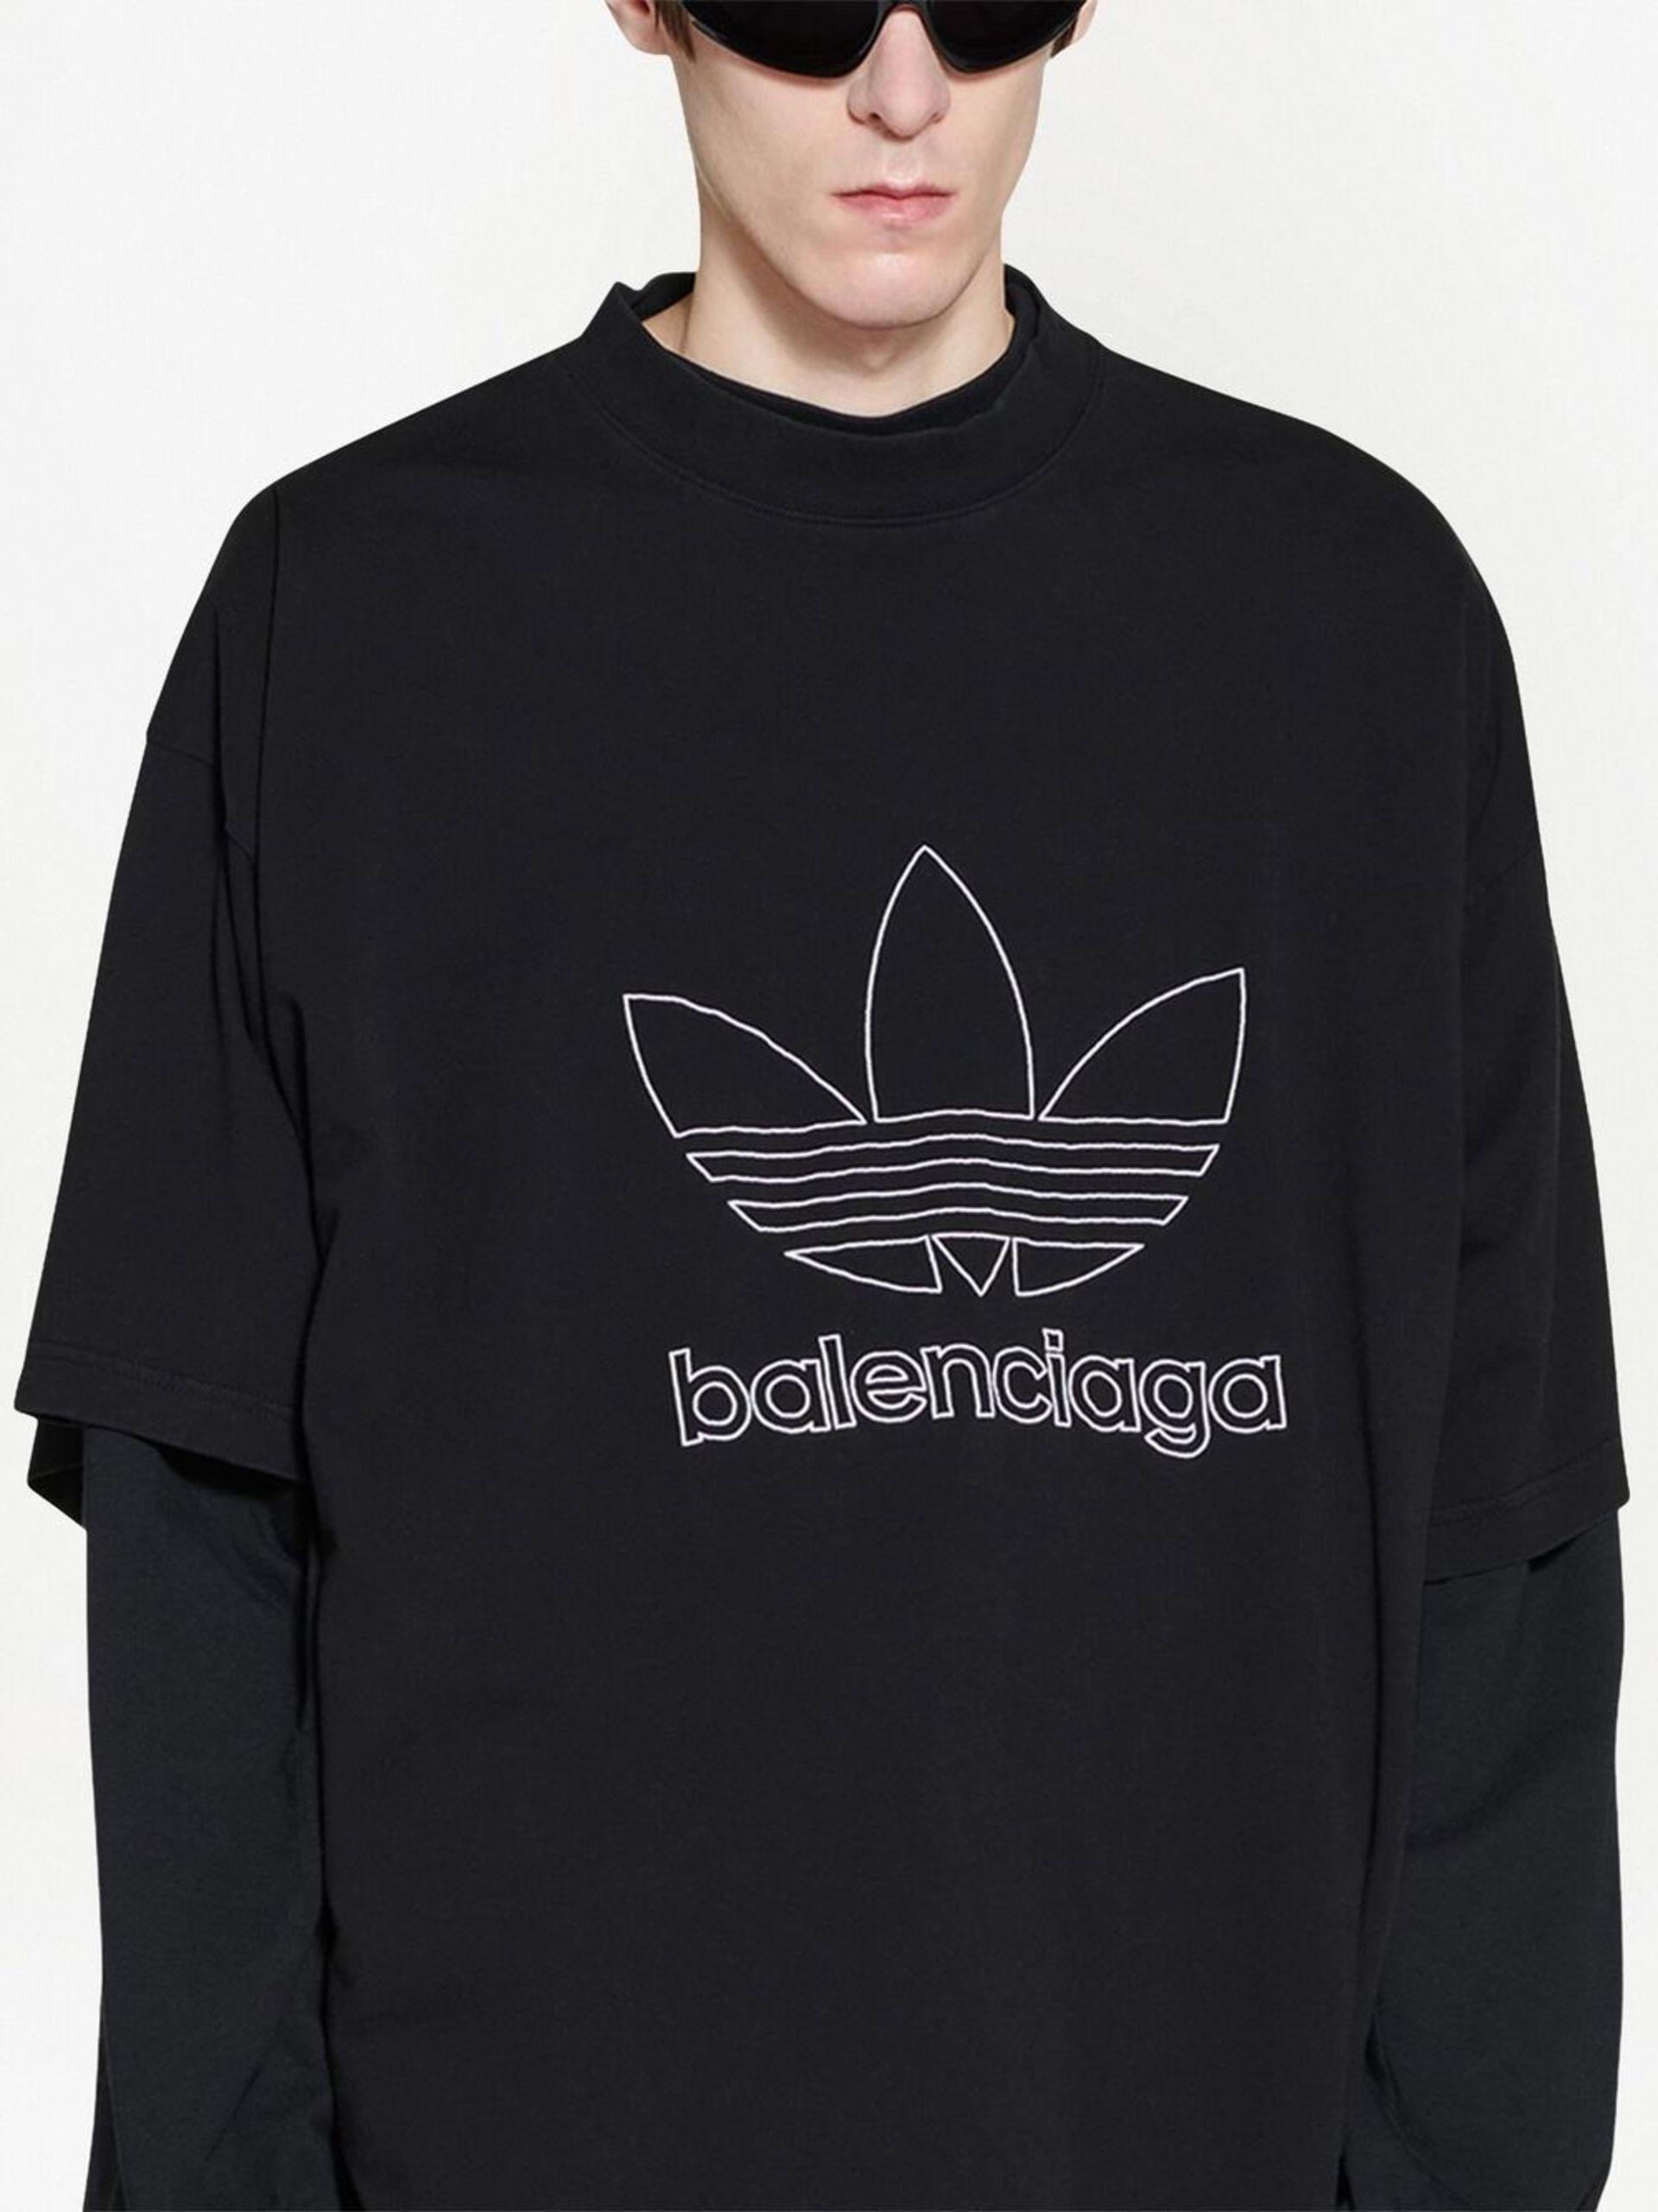 Balenciaga X Adidas Trefoil Print T-shirt in Black | Lyst